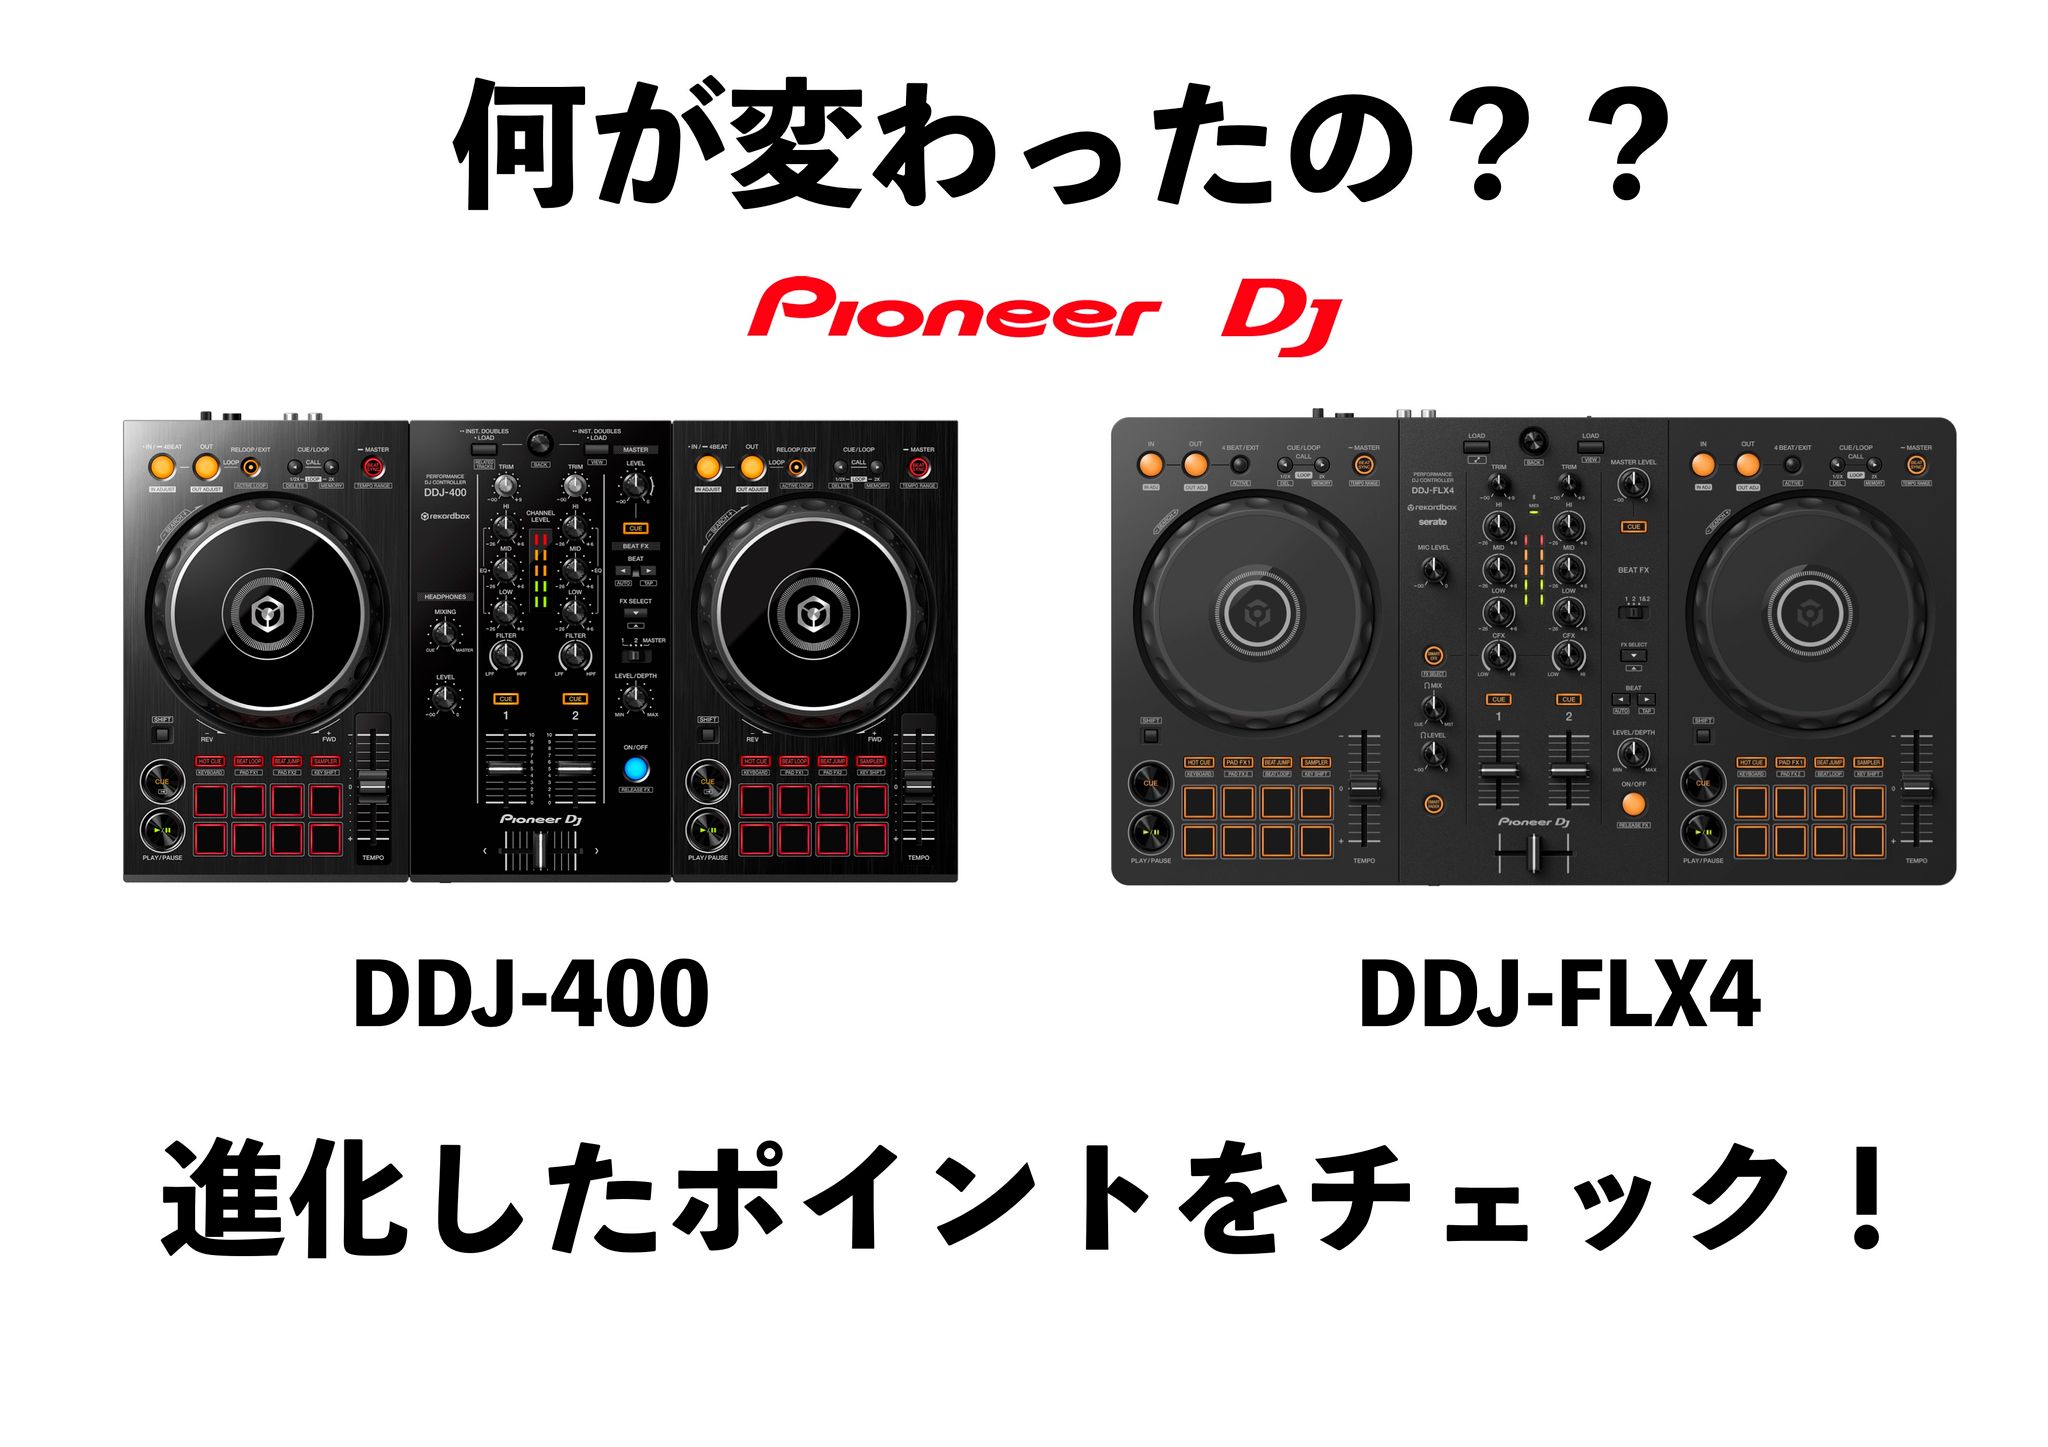 DDJ-FLX4